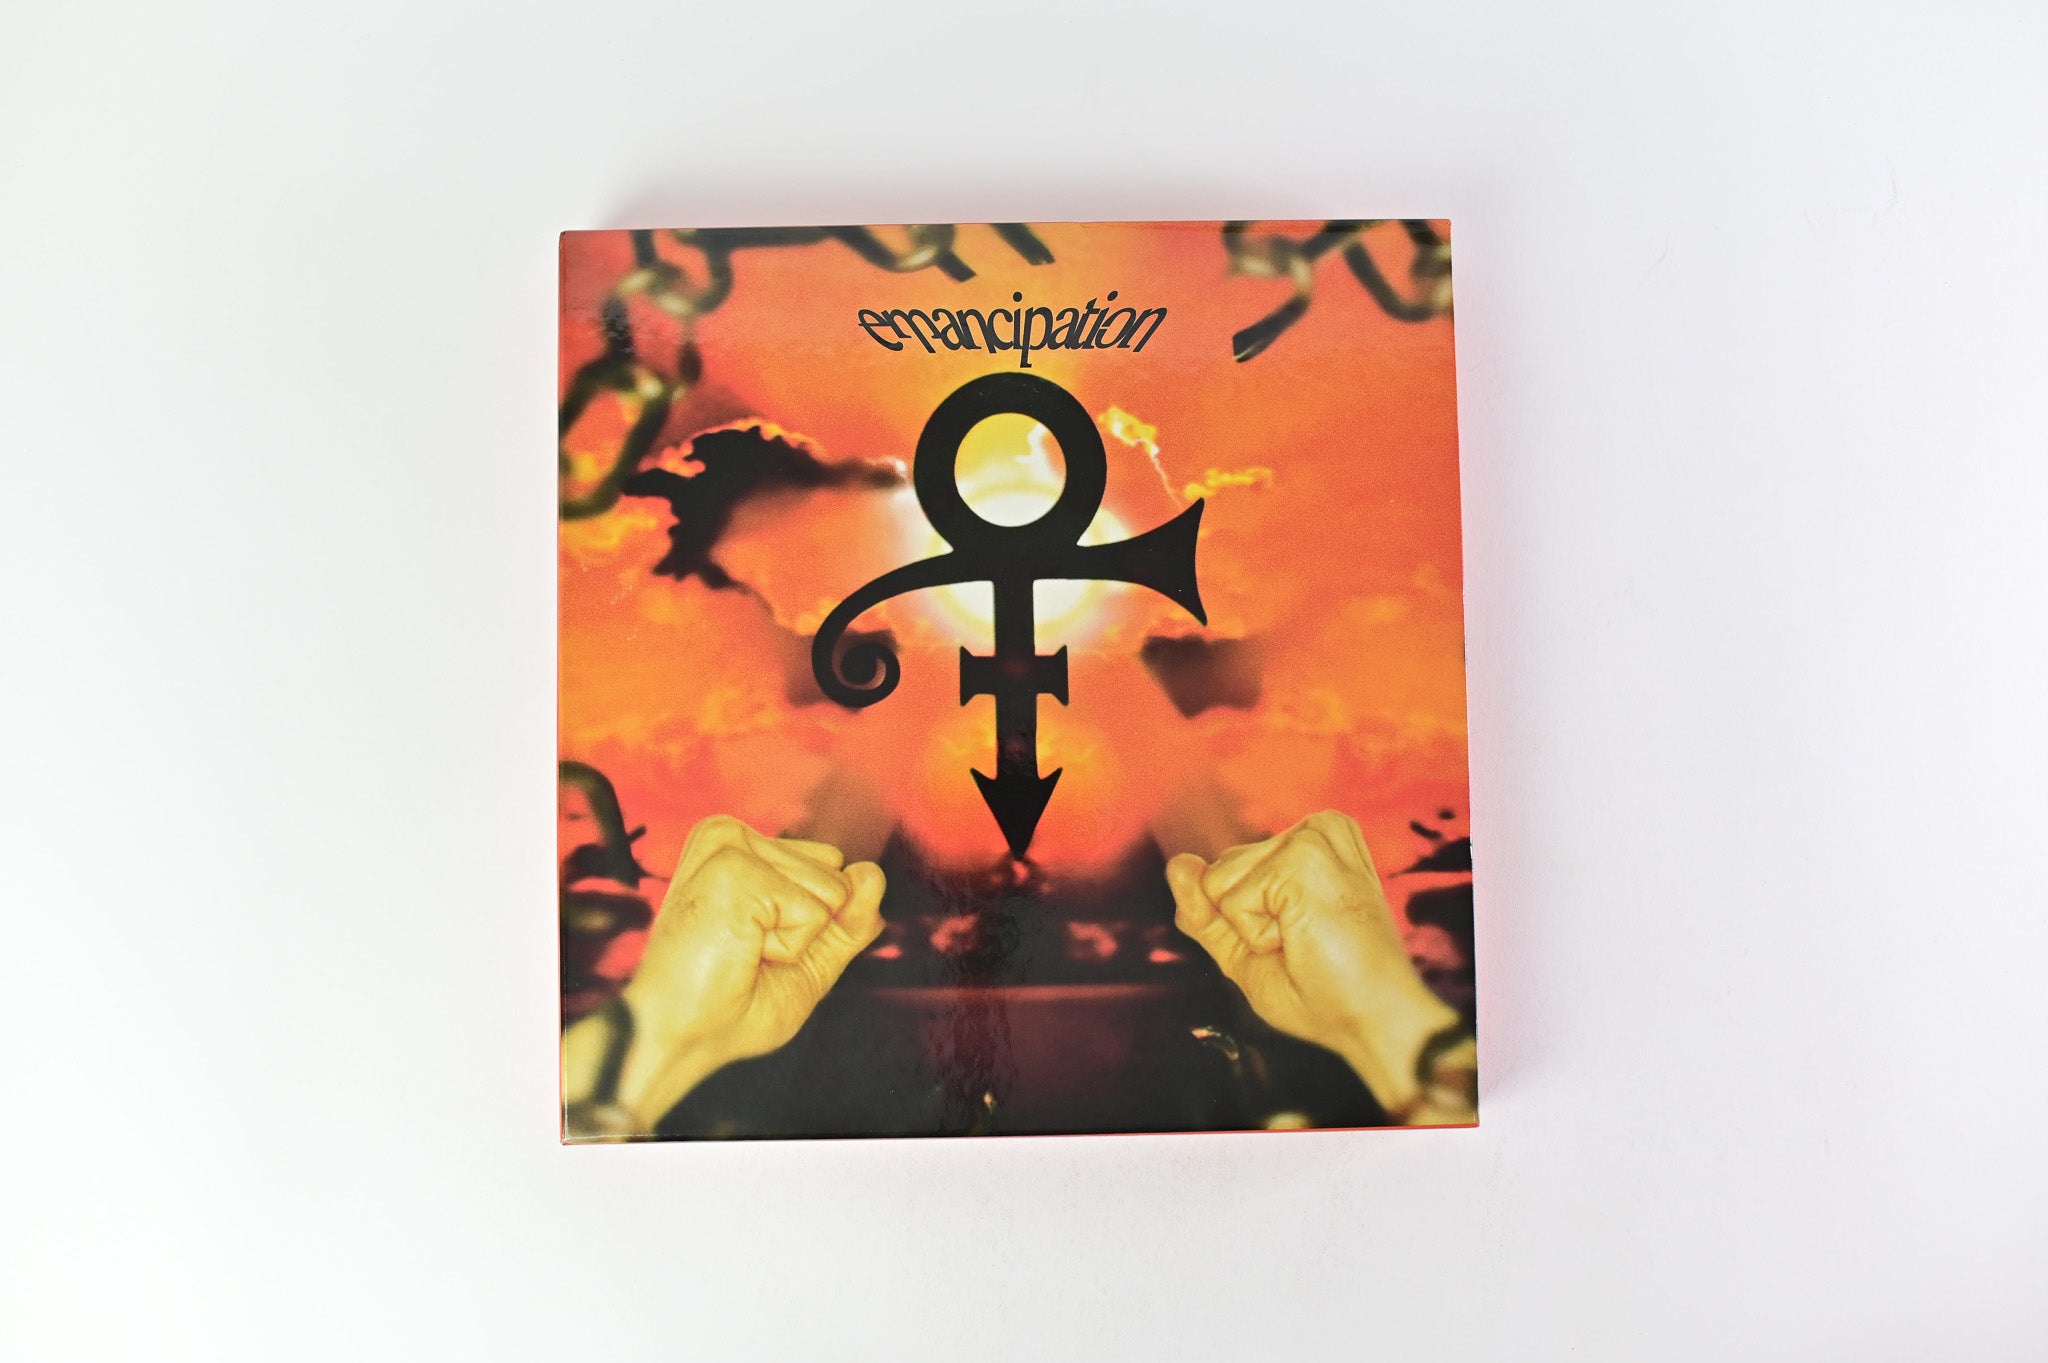 The Artist (Formerly Known As Prince) - Emancipation on NPG Ltd Purple Vinyl Box Set Reissue